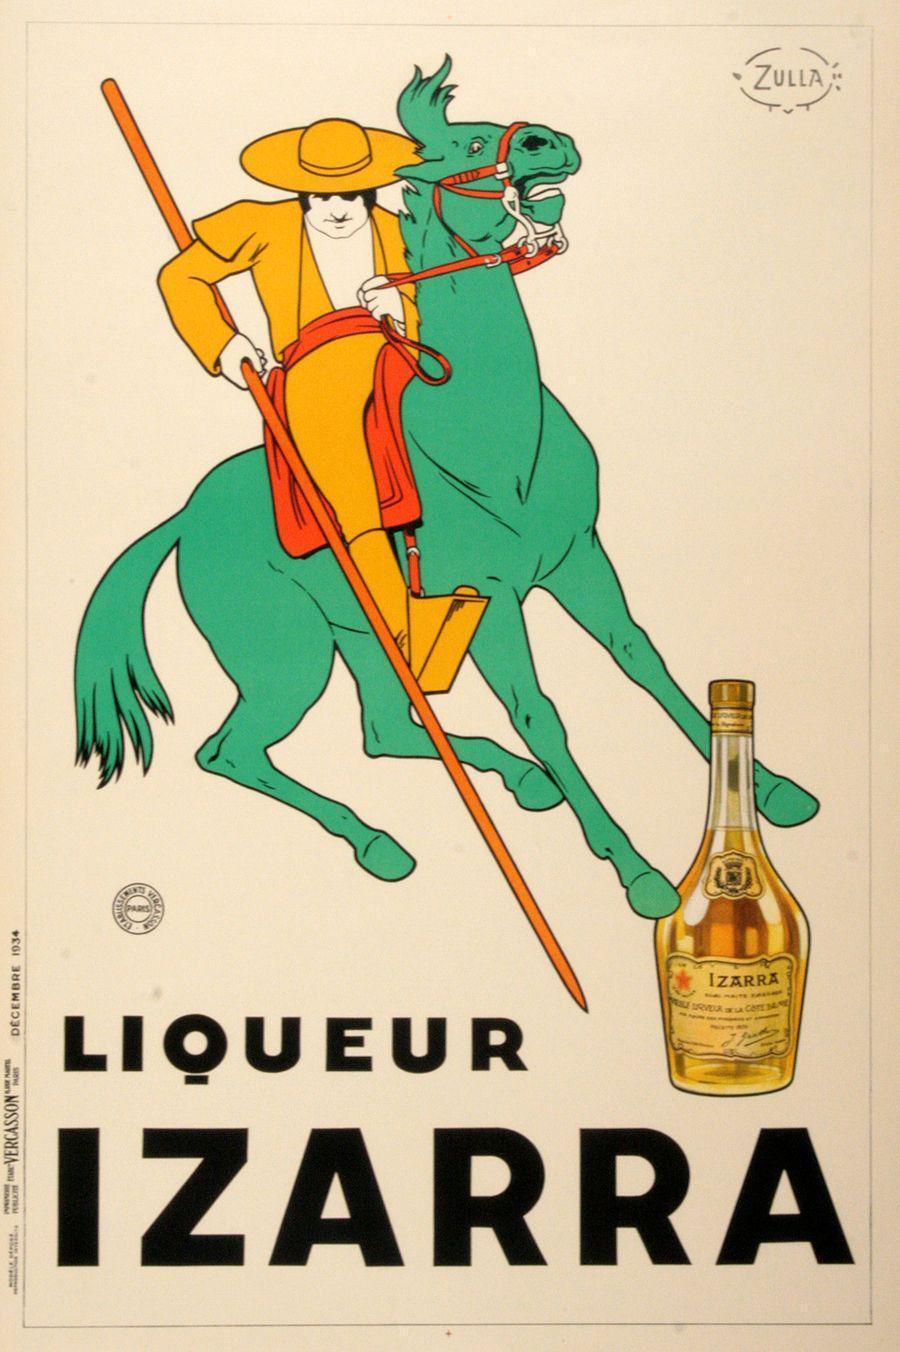 French Original Vintage Poster 1934 for Liqueur Izarra by Zulla